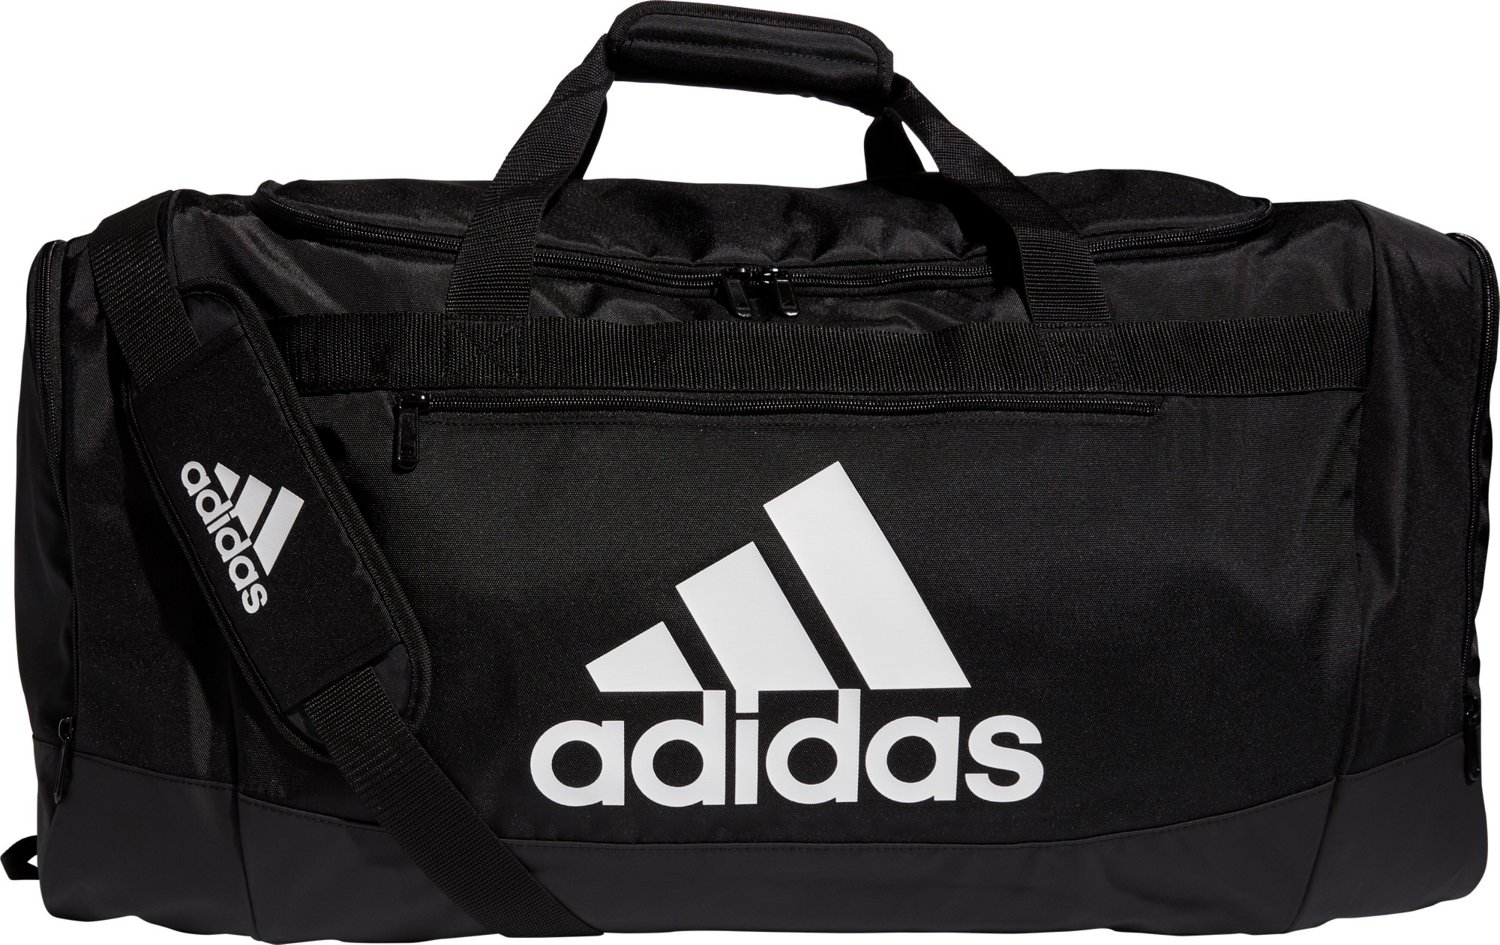 adidas Defender IV Large Duffel Bag | Free Shipping at Academy